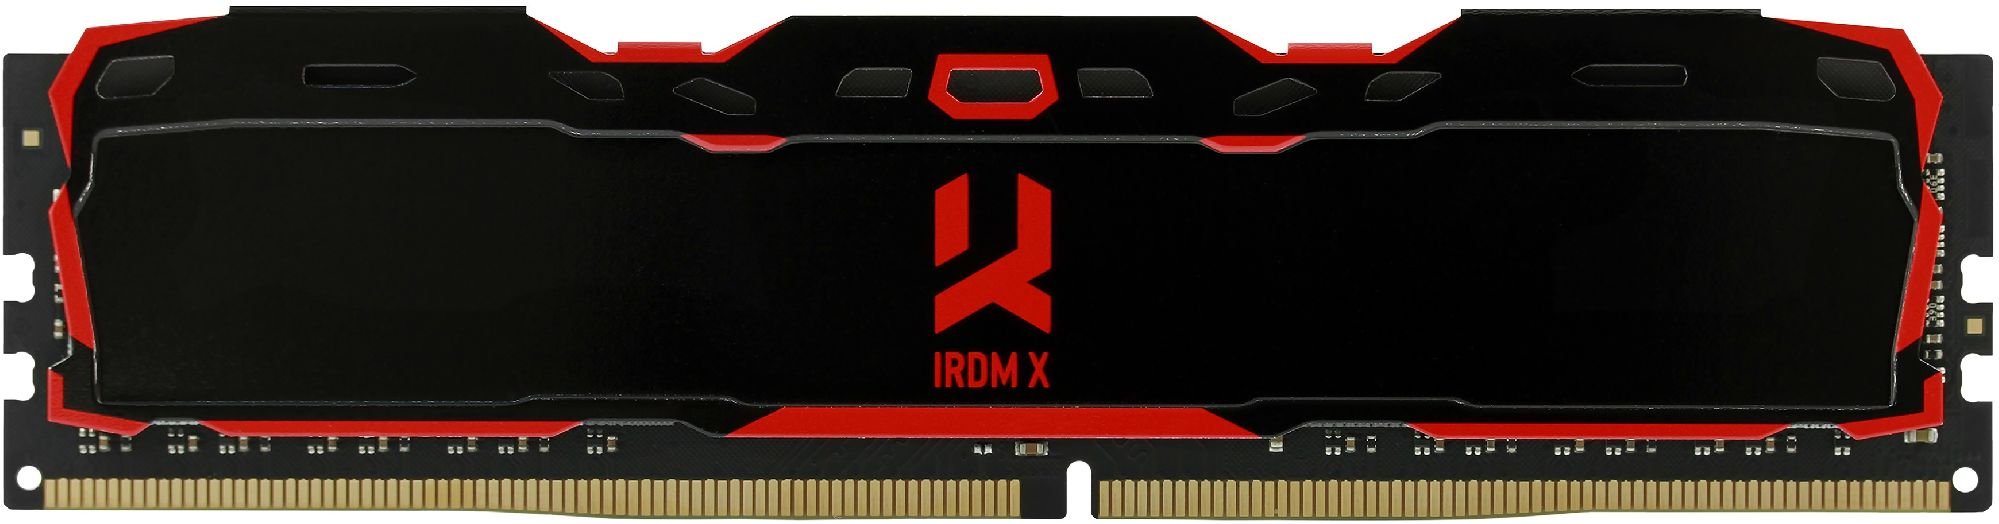 Memorie RAM Goodram IRDM X Black, IR-X3000D464L16S/8G, 8GB, DDR4, 3000MHz, CL16